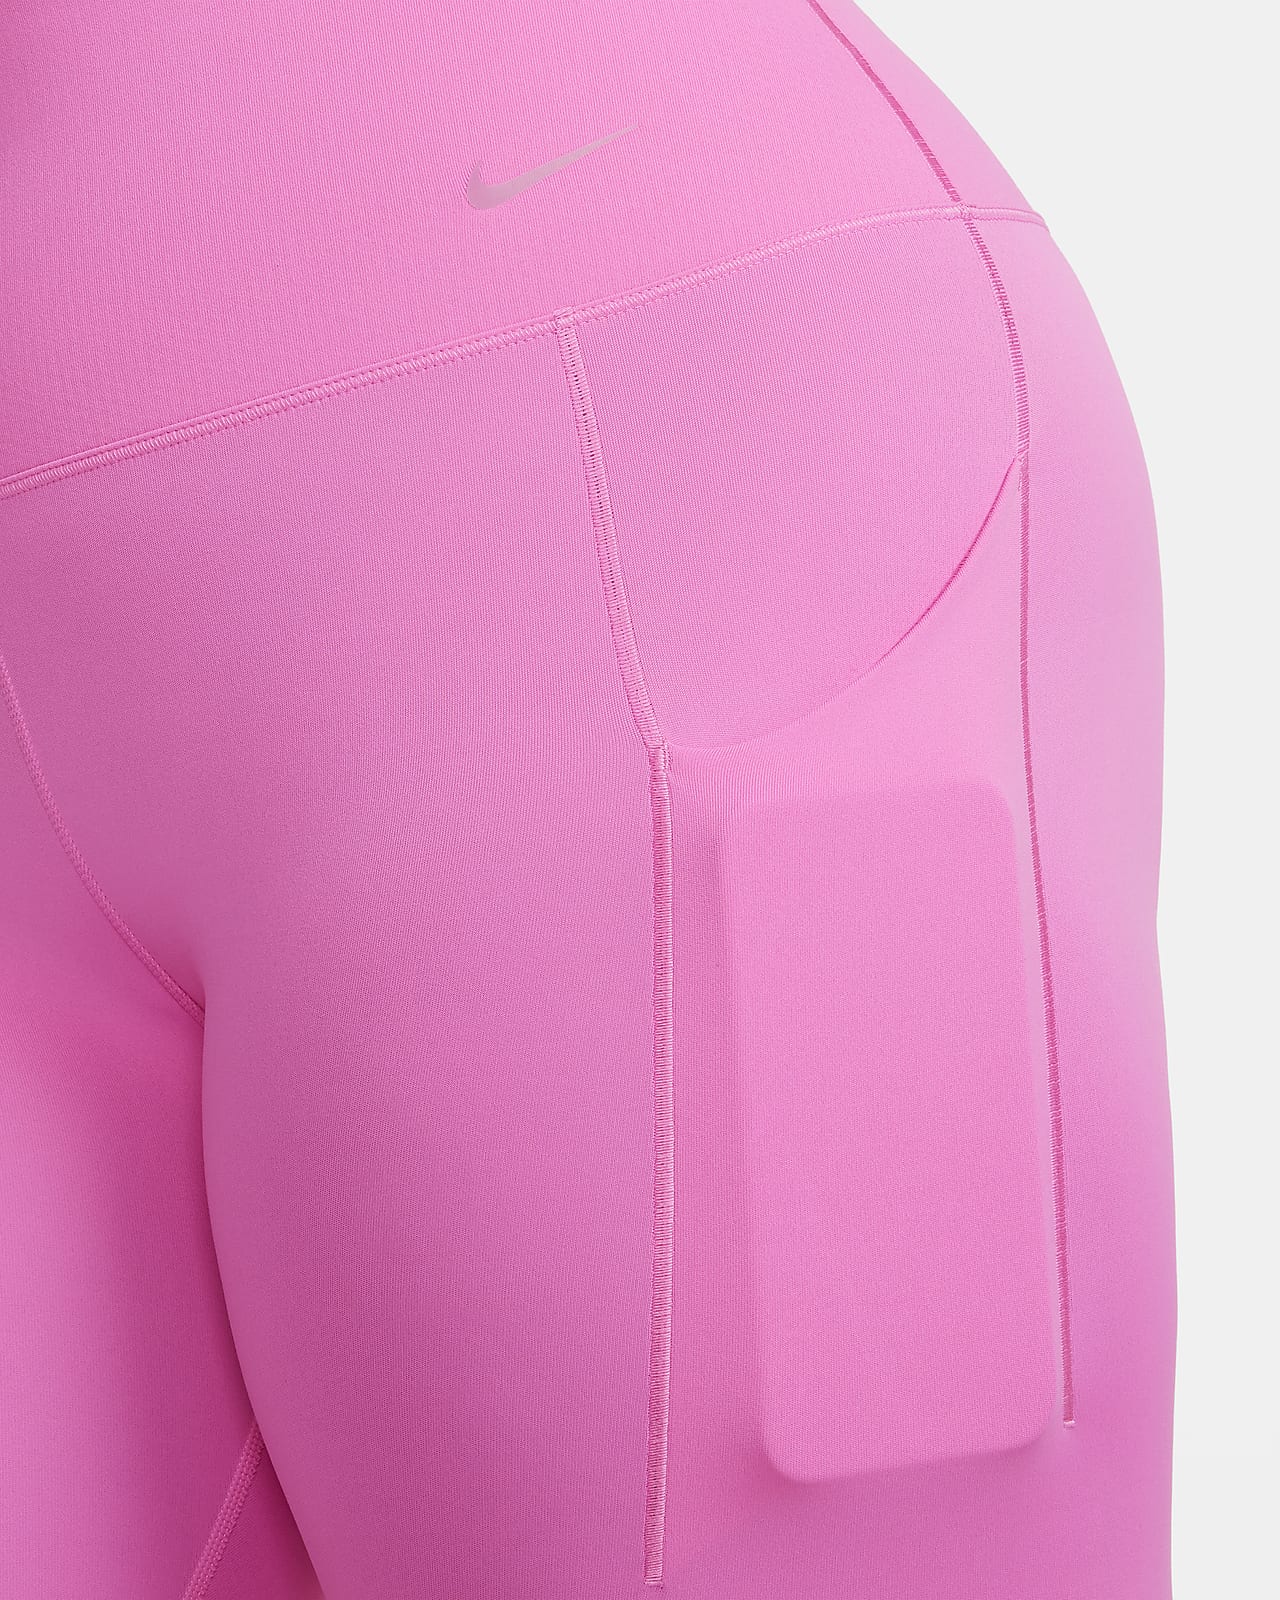 Nike Universa Women's Medium-Support High-Waisted Full-Length Leggings with  Pockets.